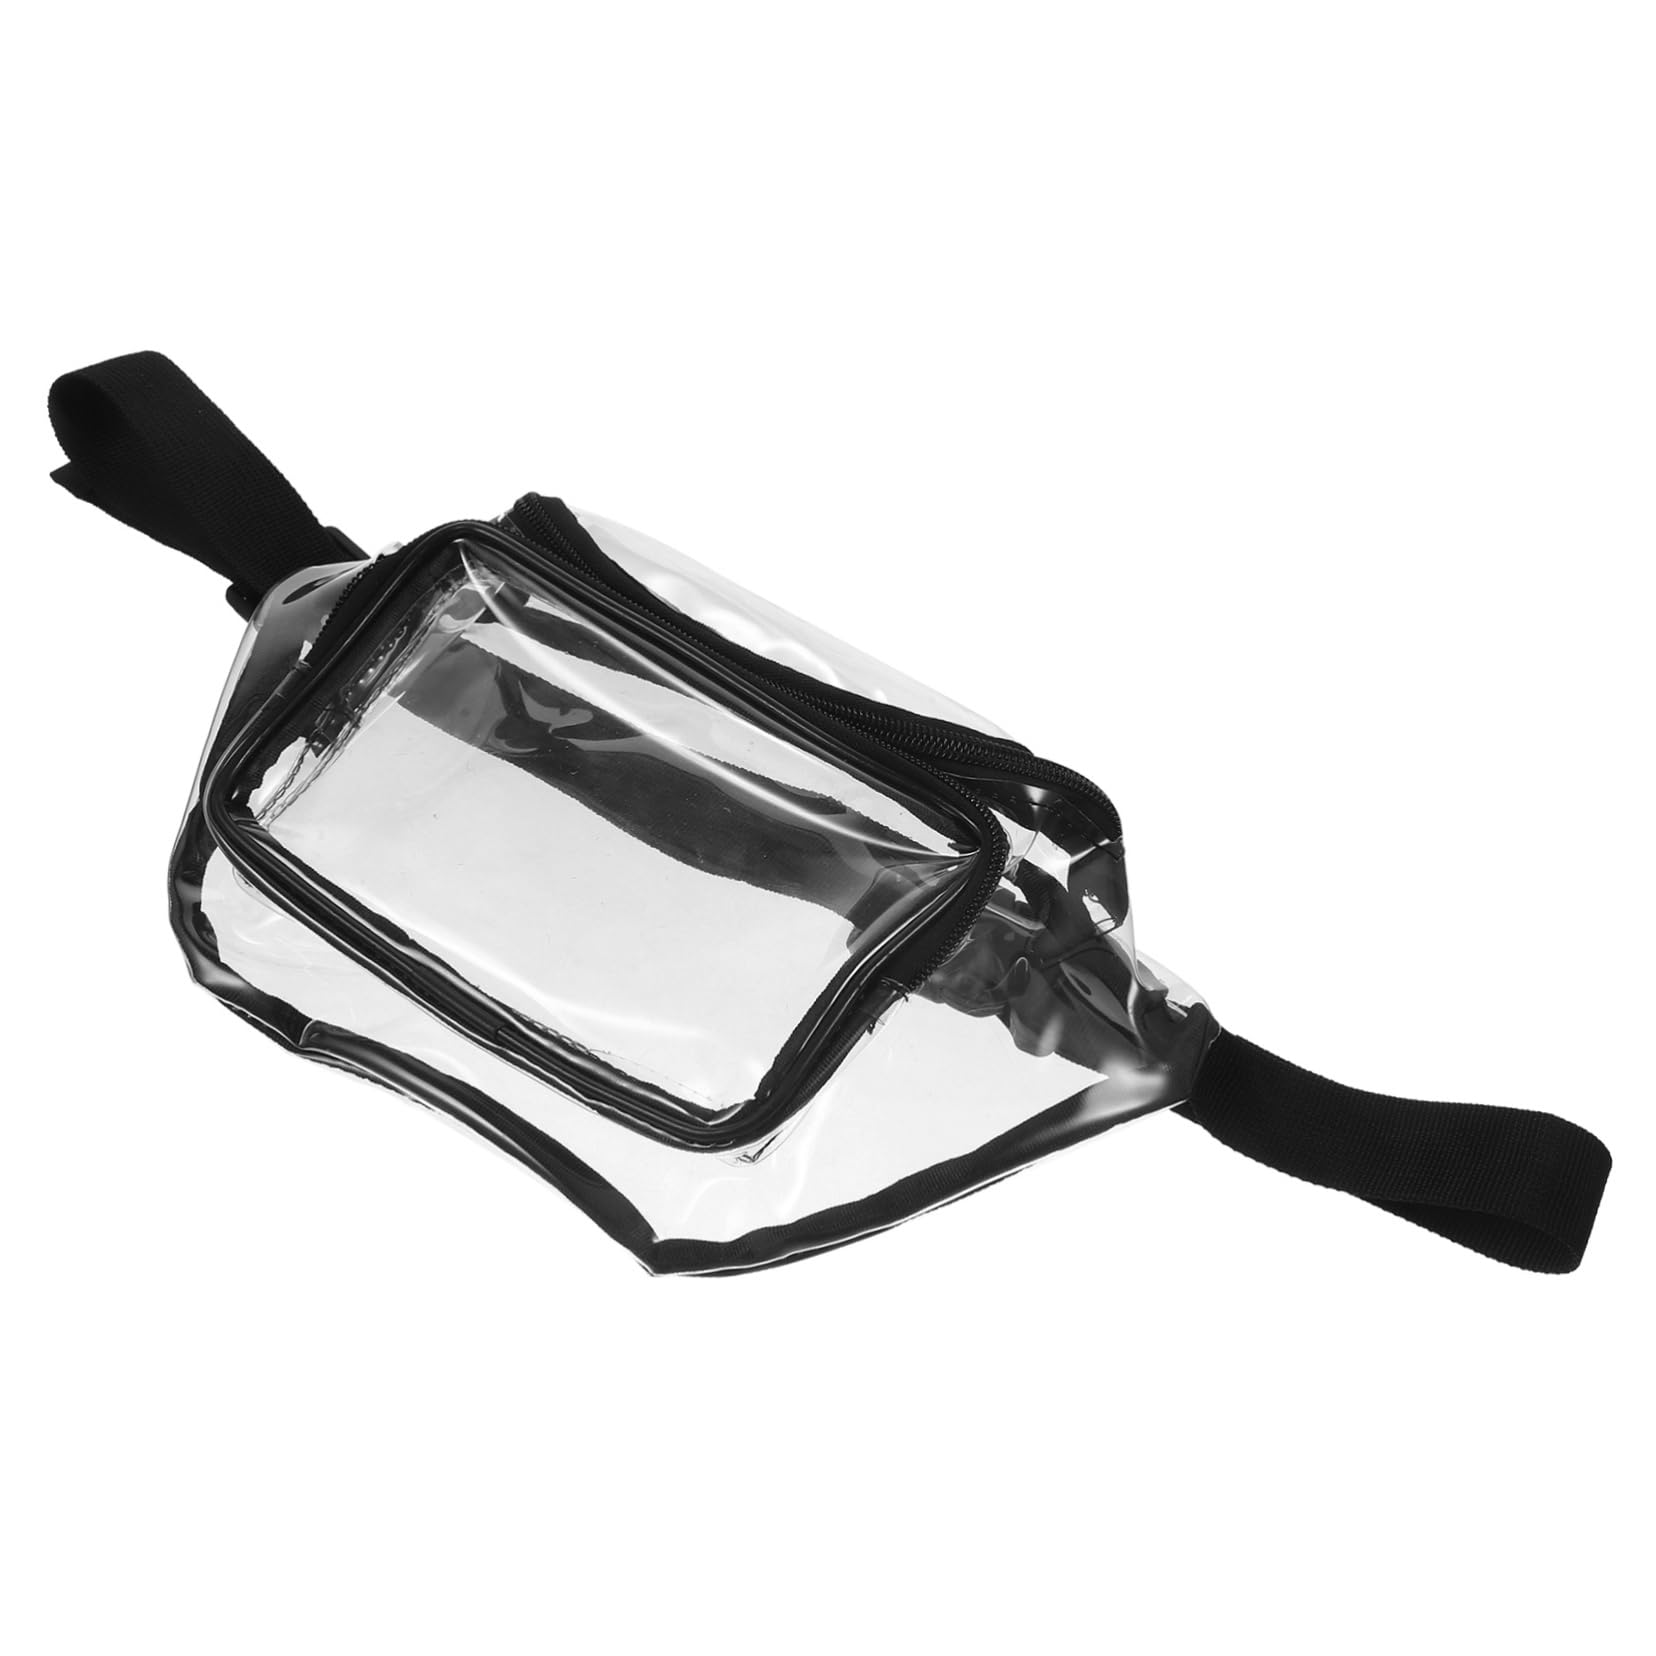 PRETYZOOM shoulder bag ｼｮﾙﾀﾞｰﾊﾞｯｸﾞ トレーニングウエストバッグ ウエストポーチ ファッション ファニーパック ショル